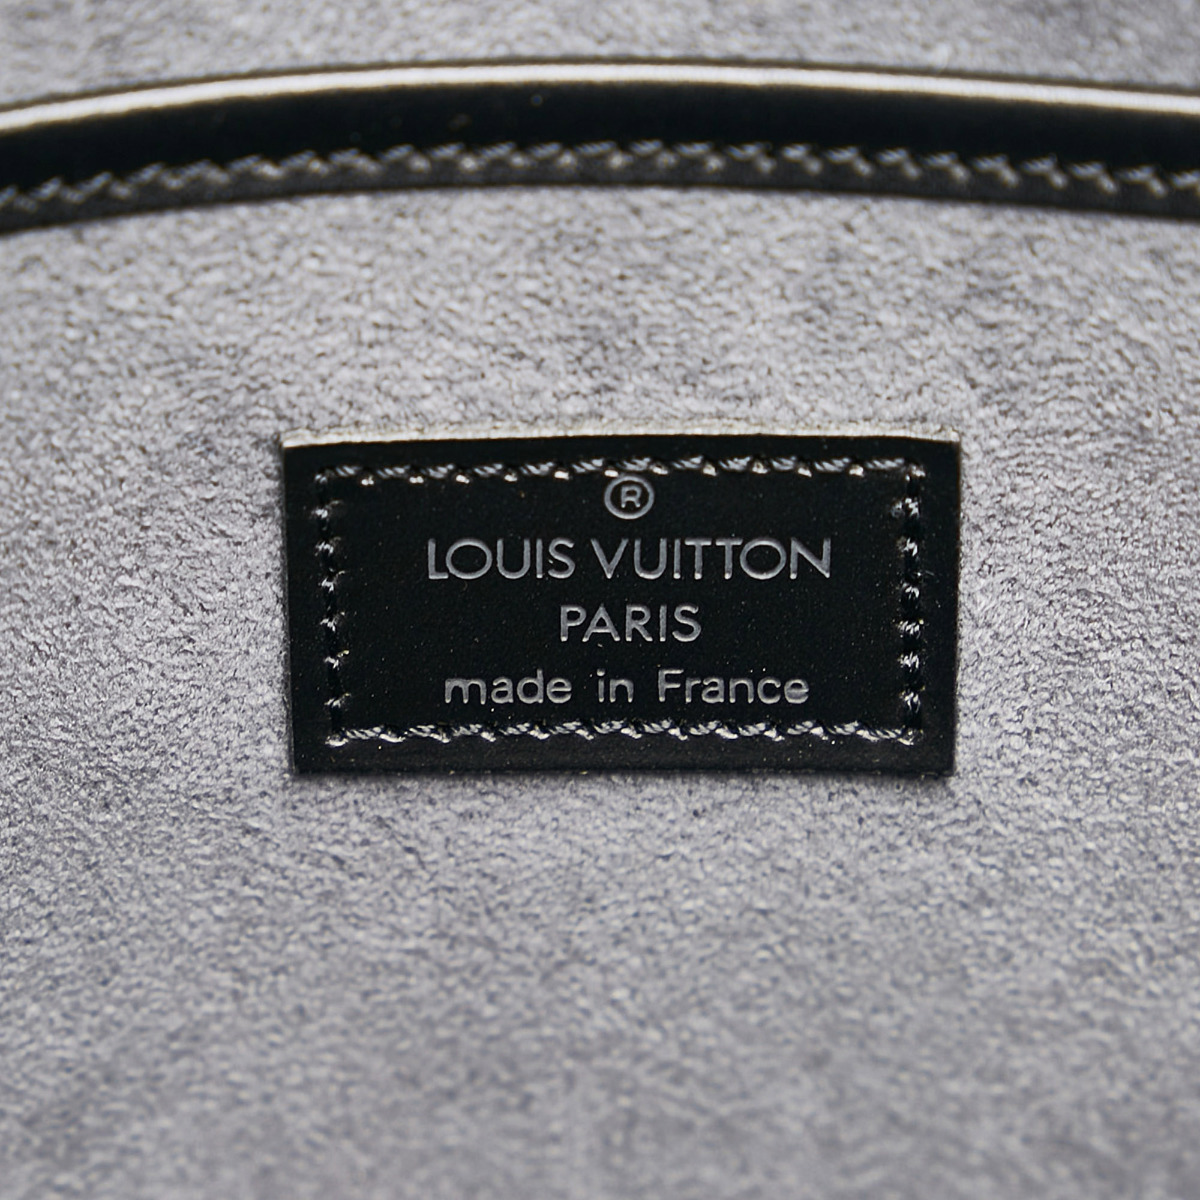 Chanel - Louis Vuitton, Sale n°2229, Lot n°375